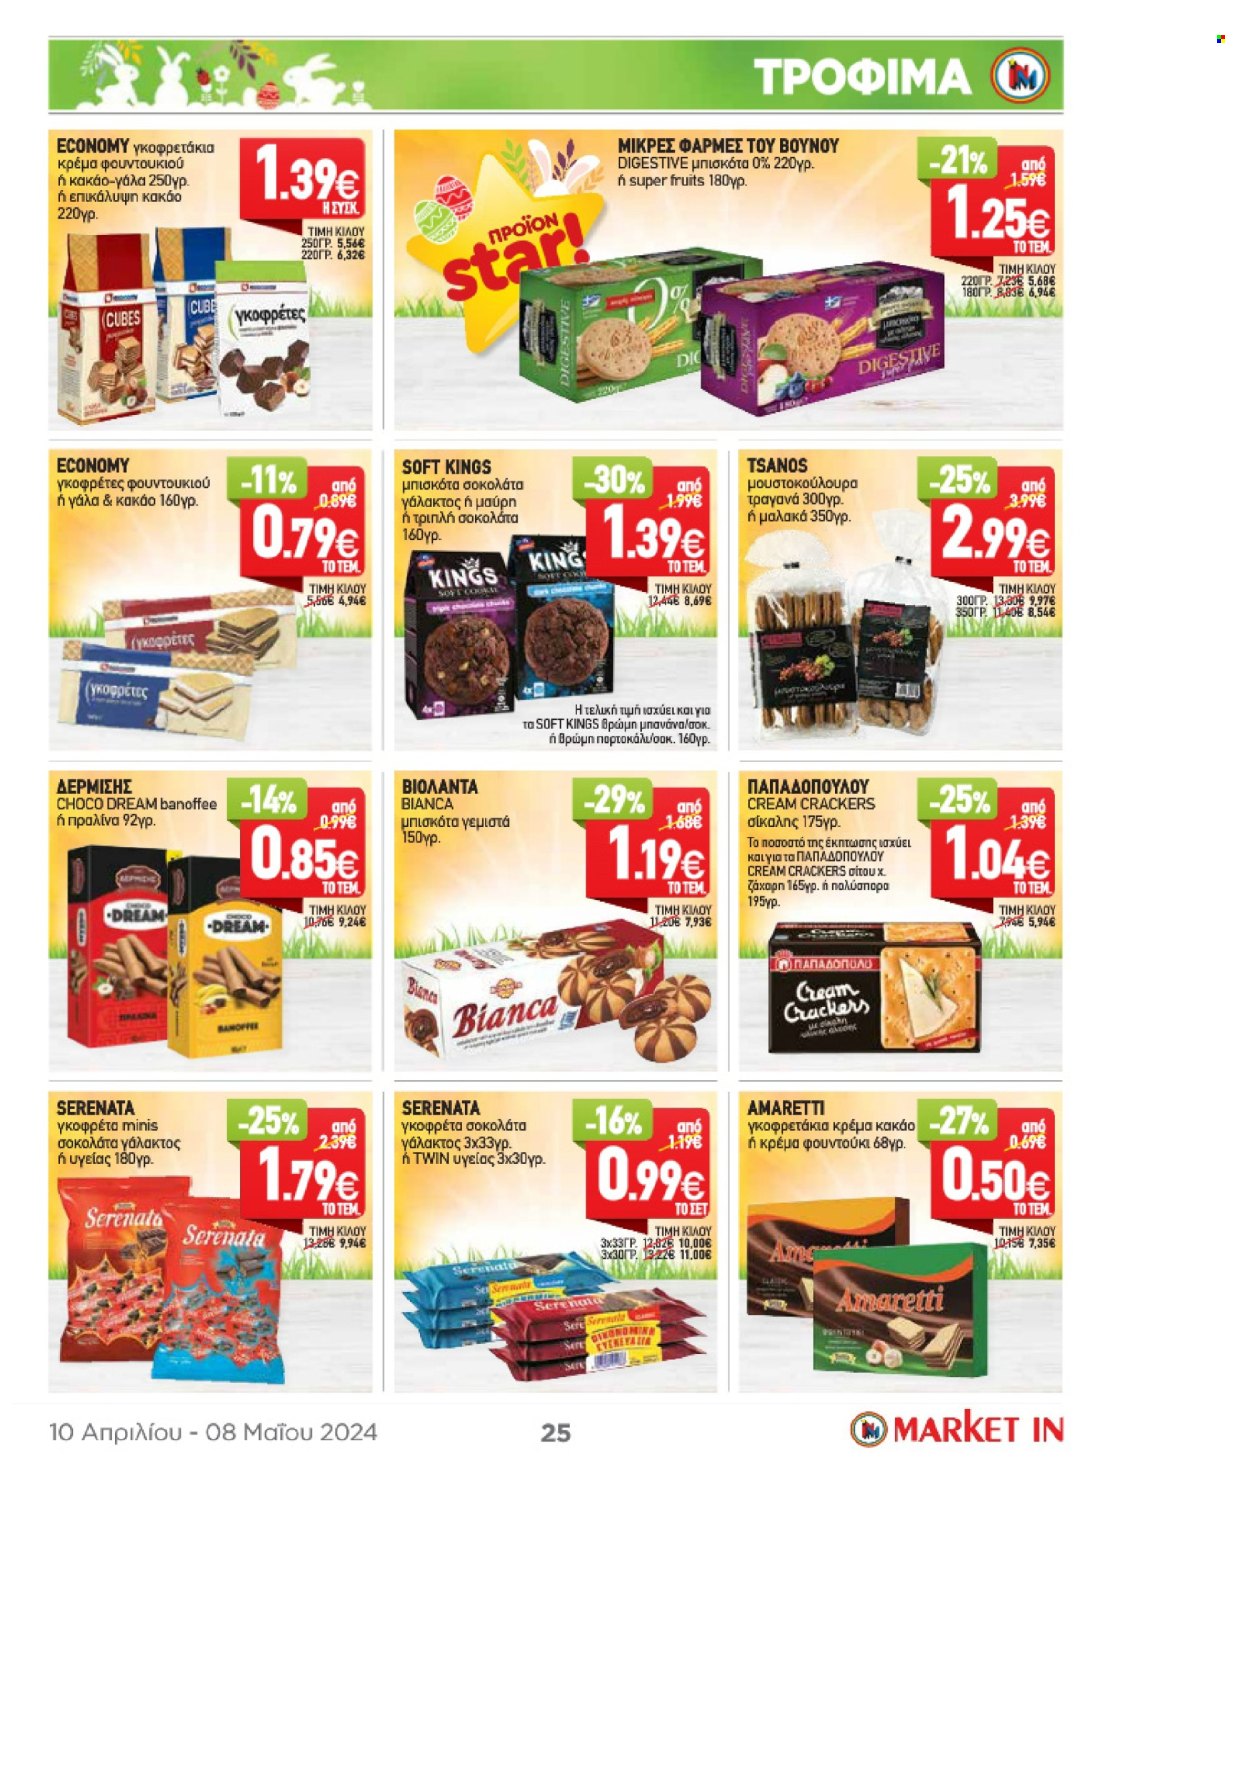 thumbnail - Φυλλάδια Market in - 10.04.2024 - 08.06.2024 - Εκπτωτικά προϊόντα - μπισκότα, Amaretti, γκοφρέτες, σοκολάτα γάλακτος, ζάχαρη, φουντουκιού. Σελίδα 25.